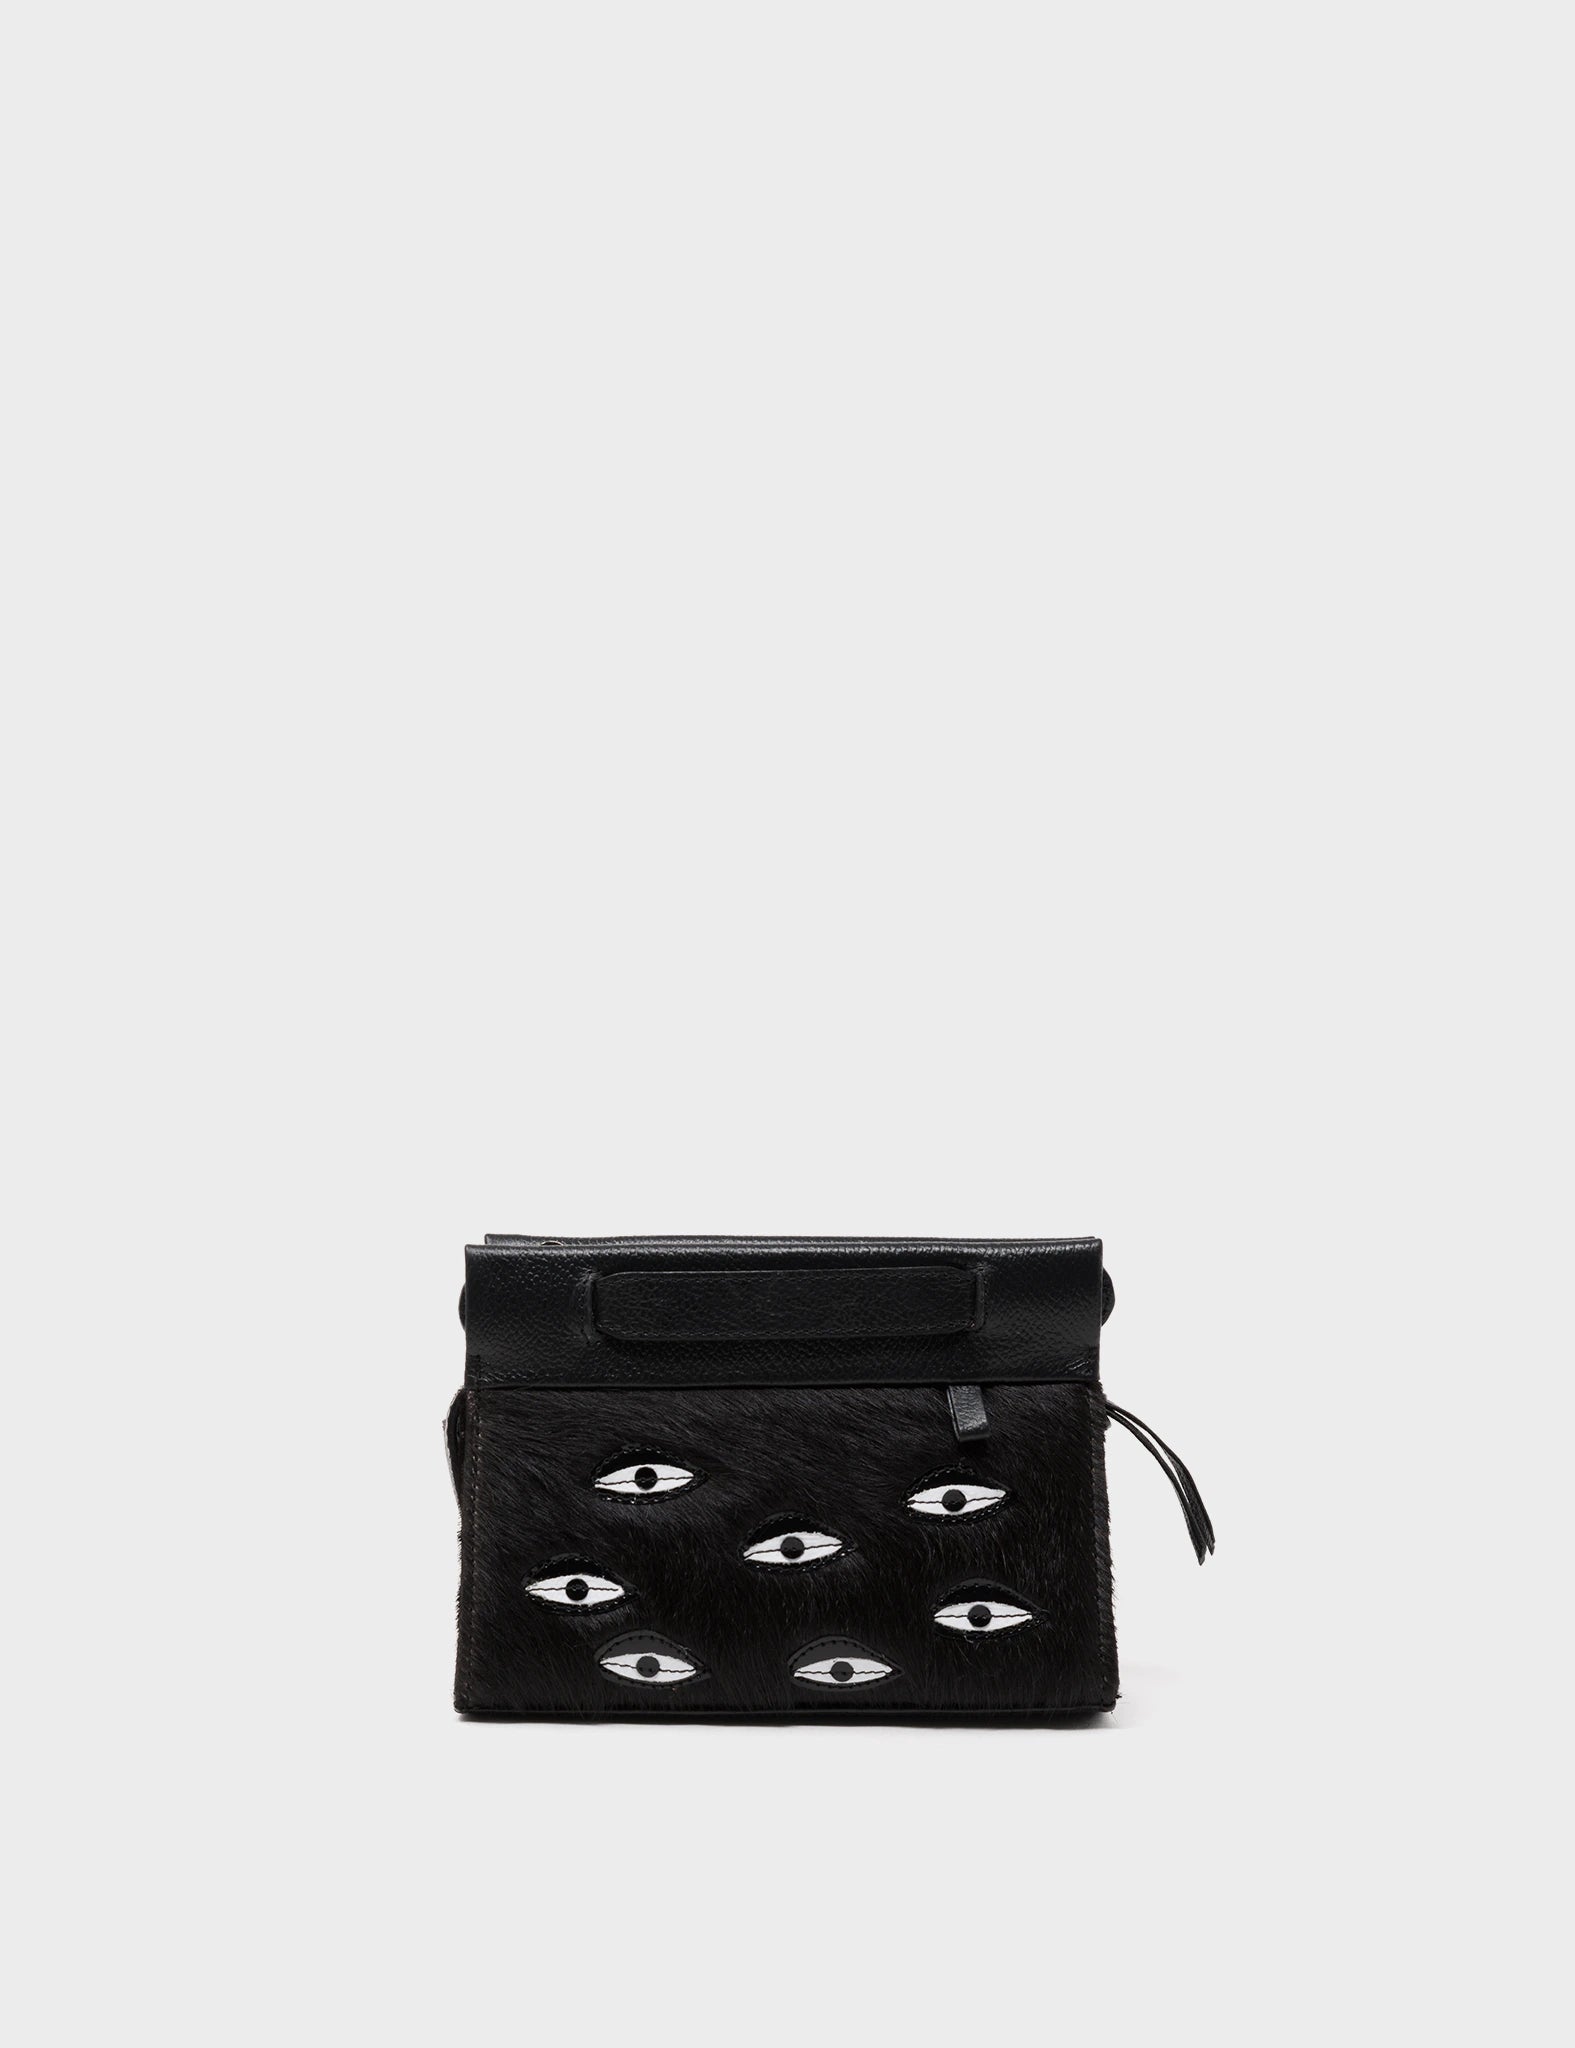 Micro Crossbody Handbag - Black Leather All Over Eyes Applique - Front